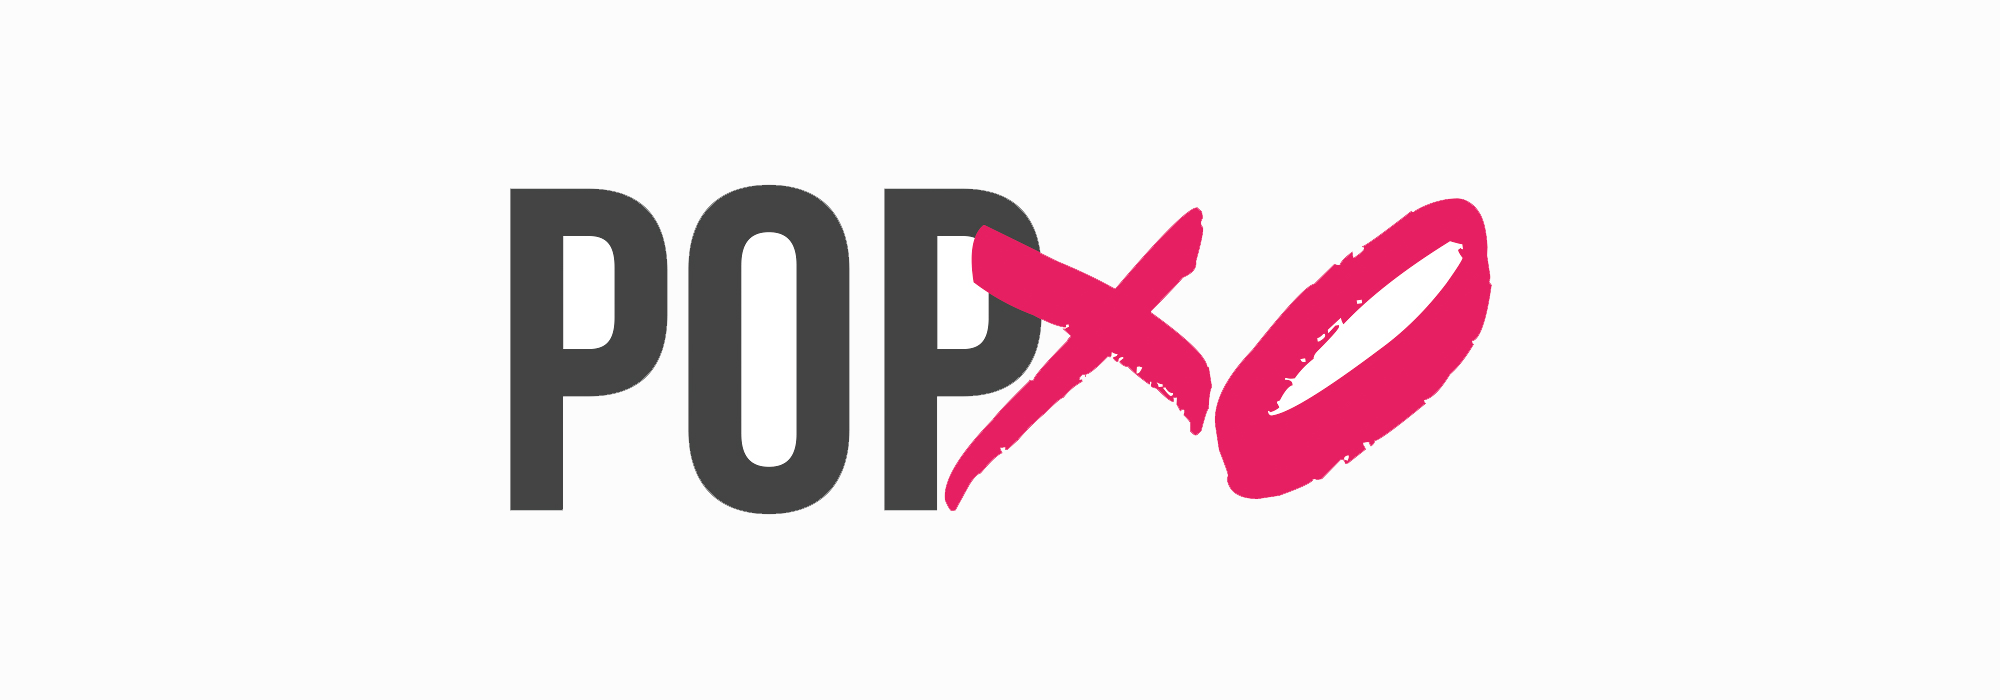 Popxo2.png